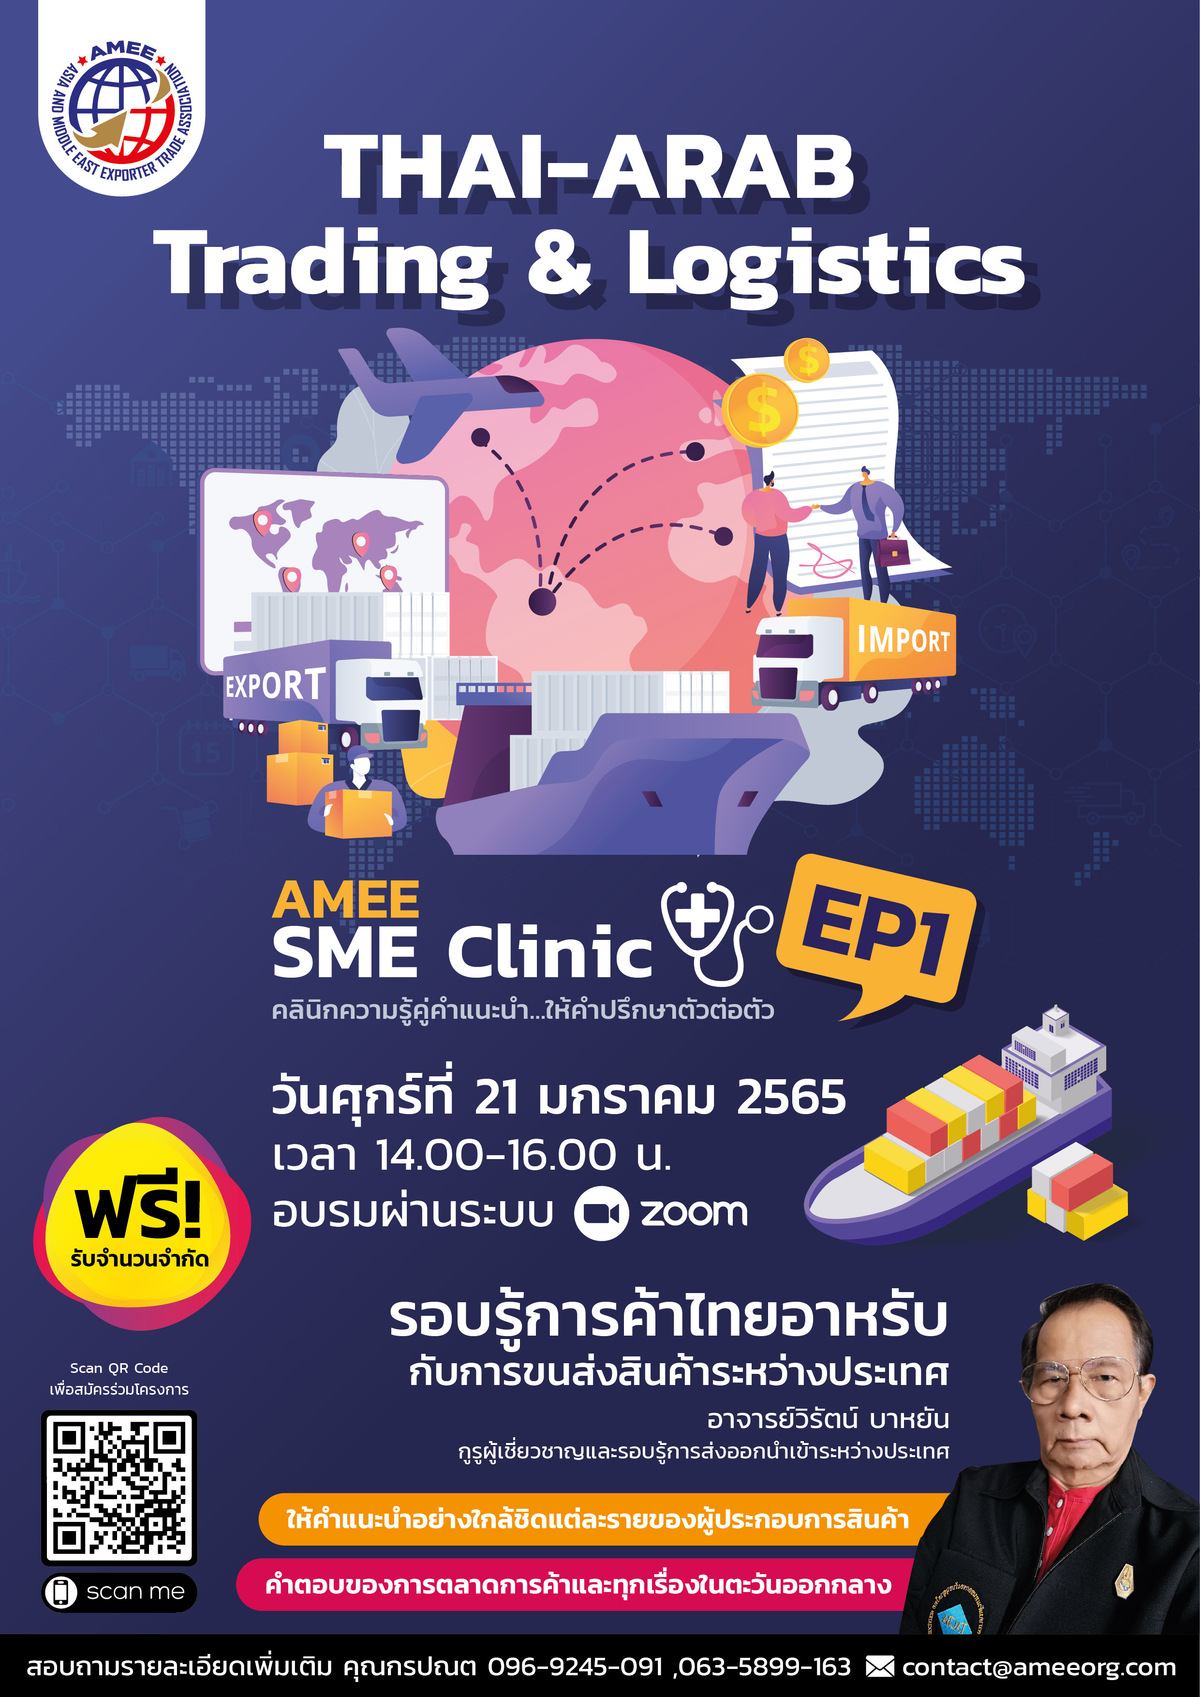 AMEE SME Clinic EP.1 รอบรู้การค้าไทยอาหรับกับการขนส่งสินค้าระหว่างประเทศ